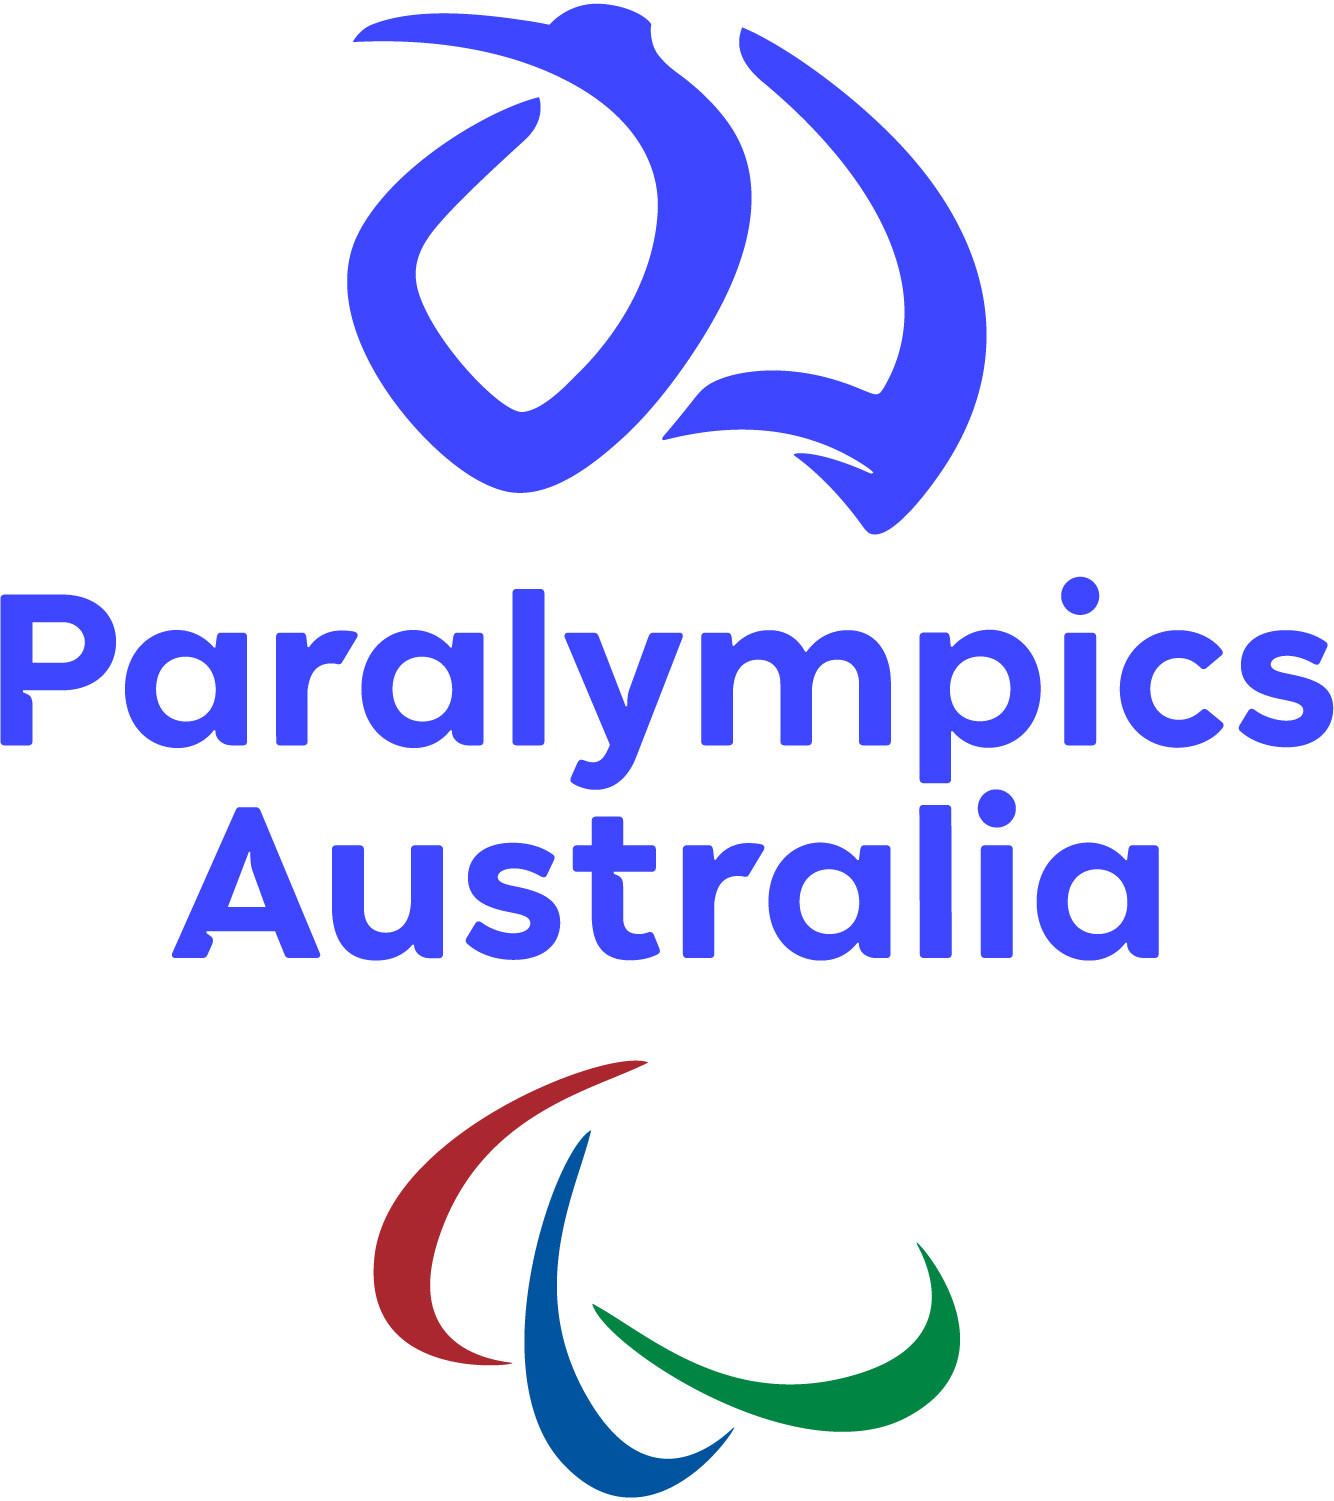 Australian Para-alpine skier O'Callaghan misses Beijing 2022 after breaking collarbone in training